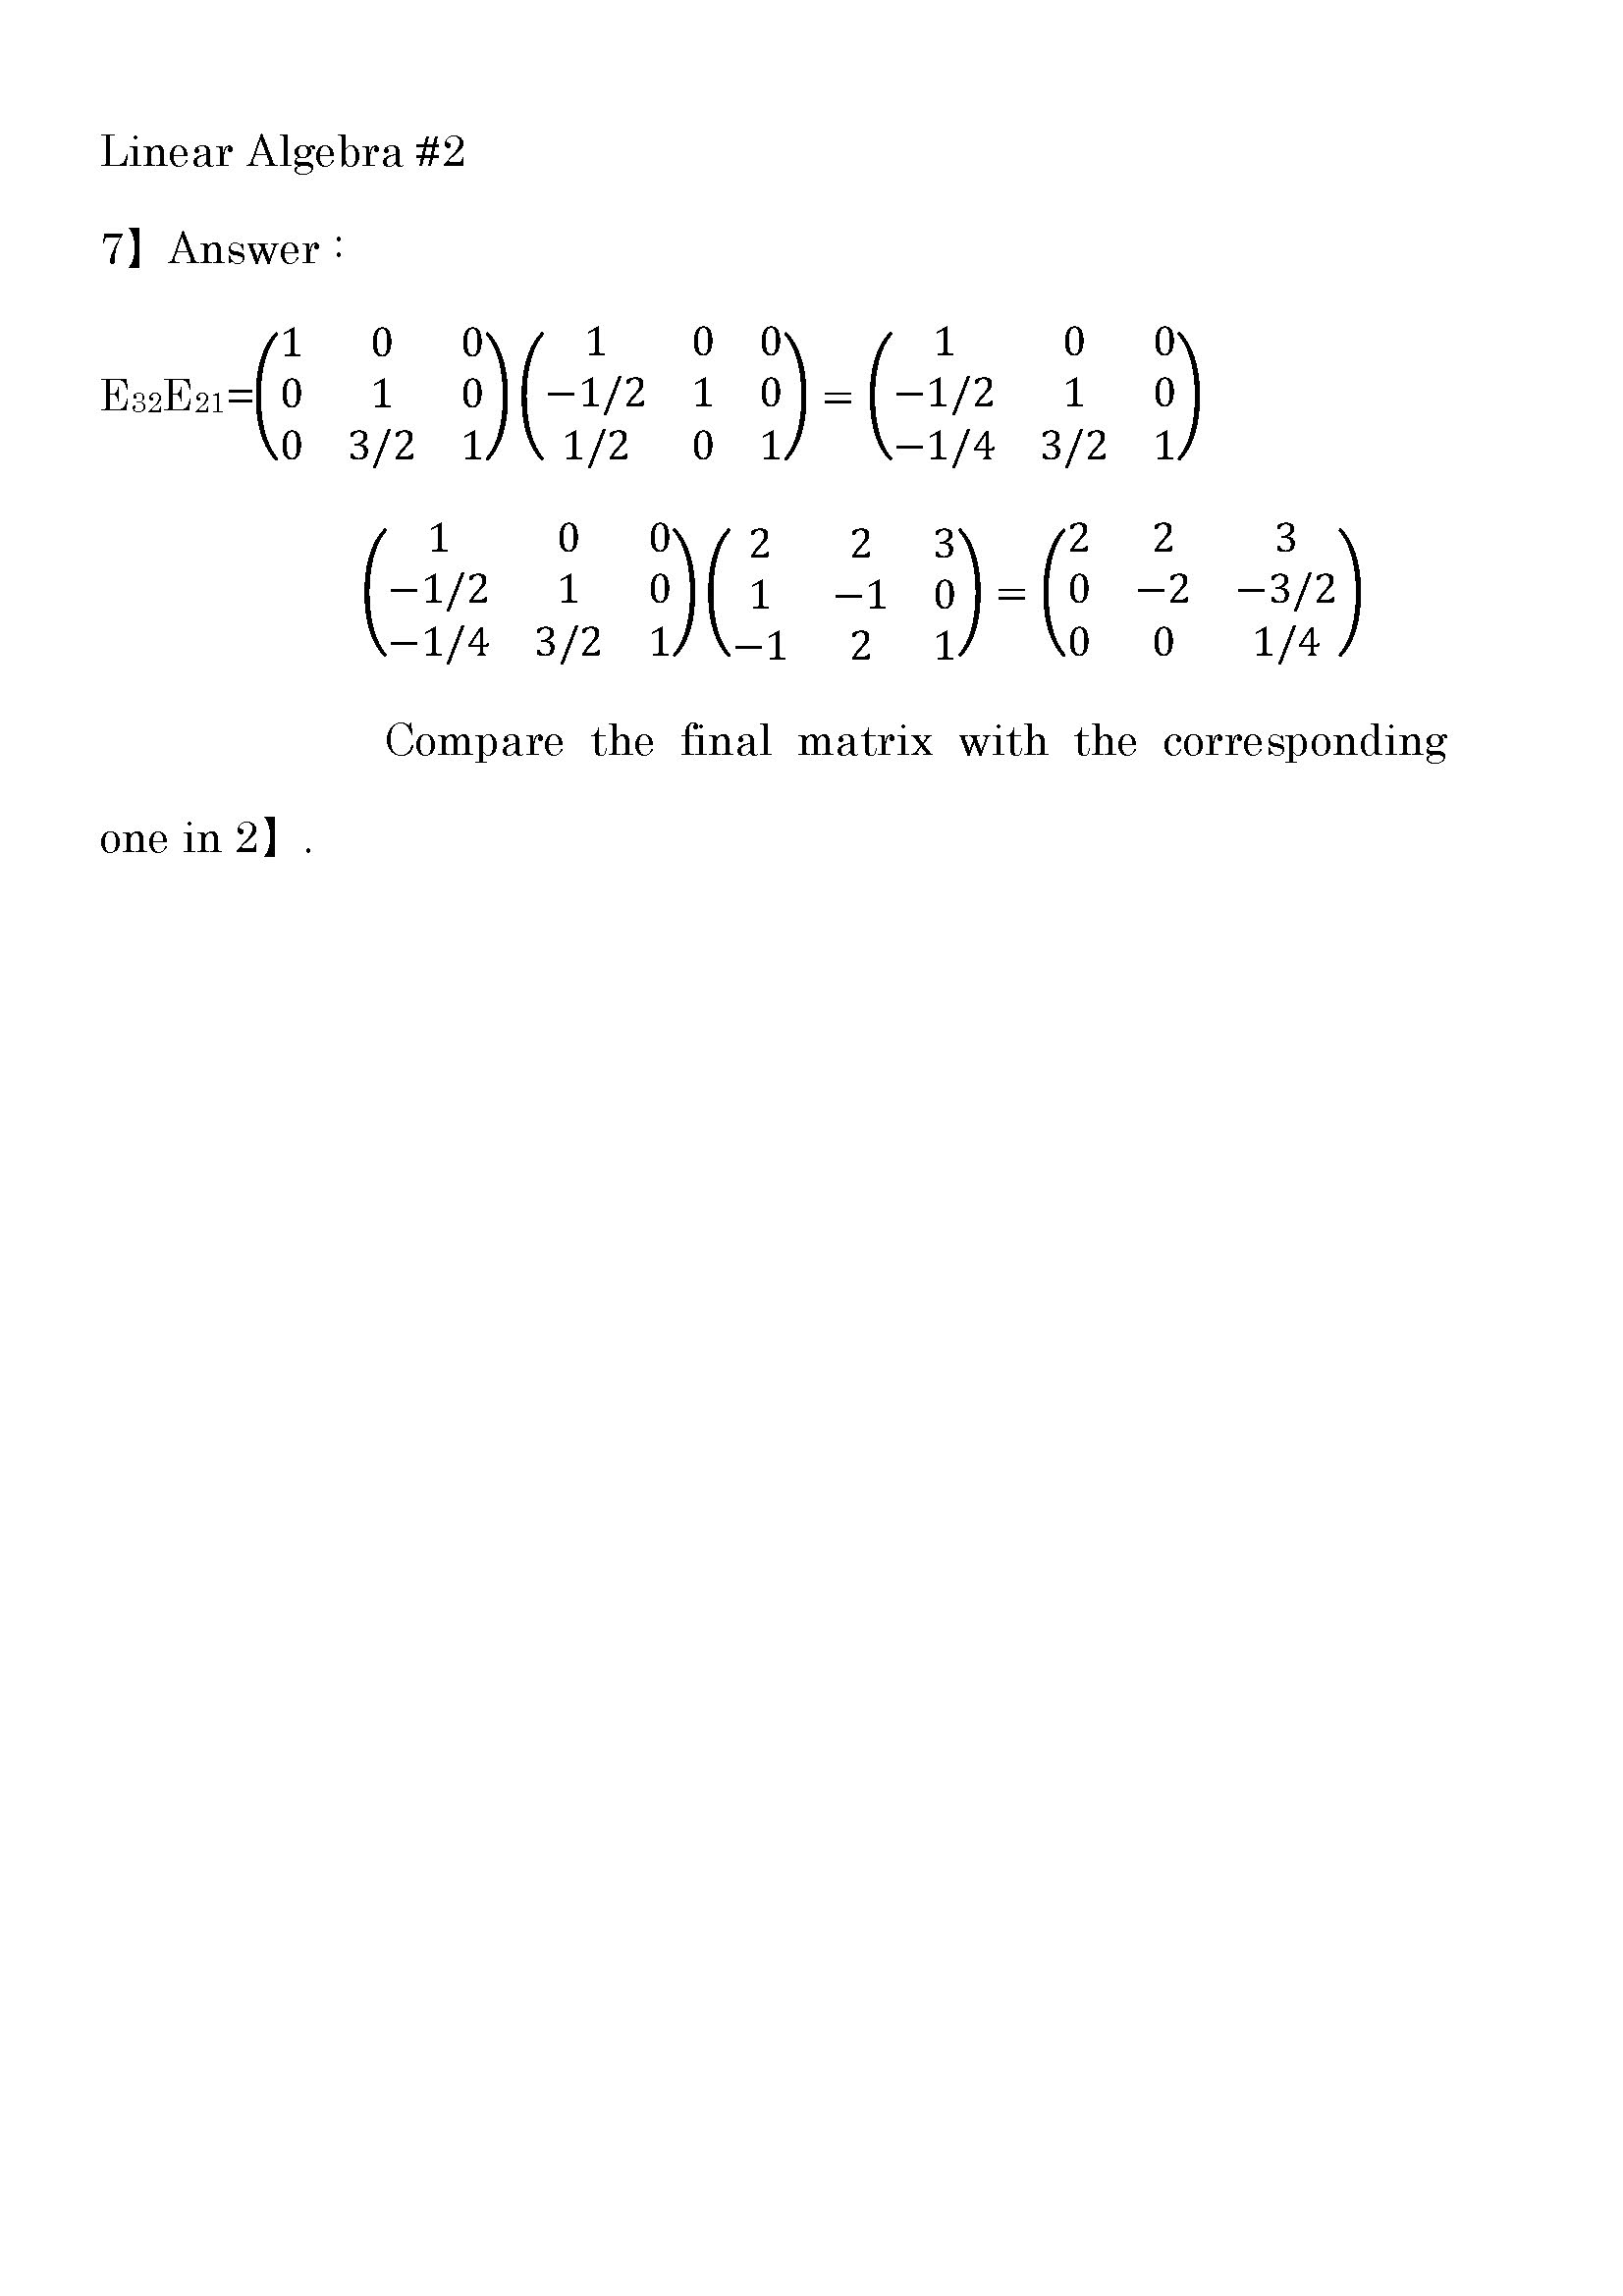 Linear_Algebra_Answer2-tate2_7.jpg